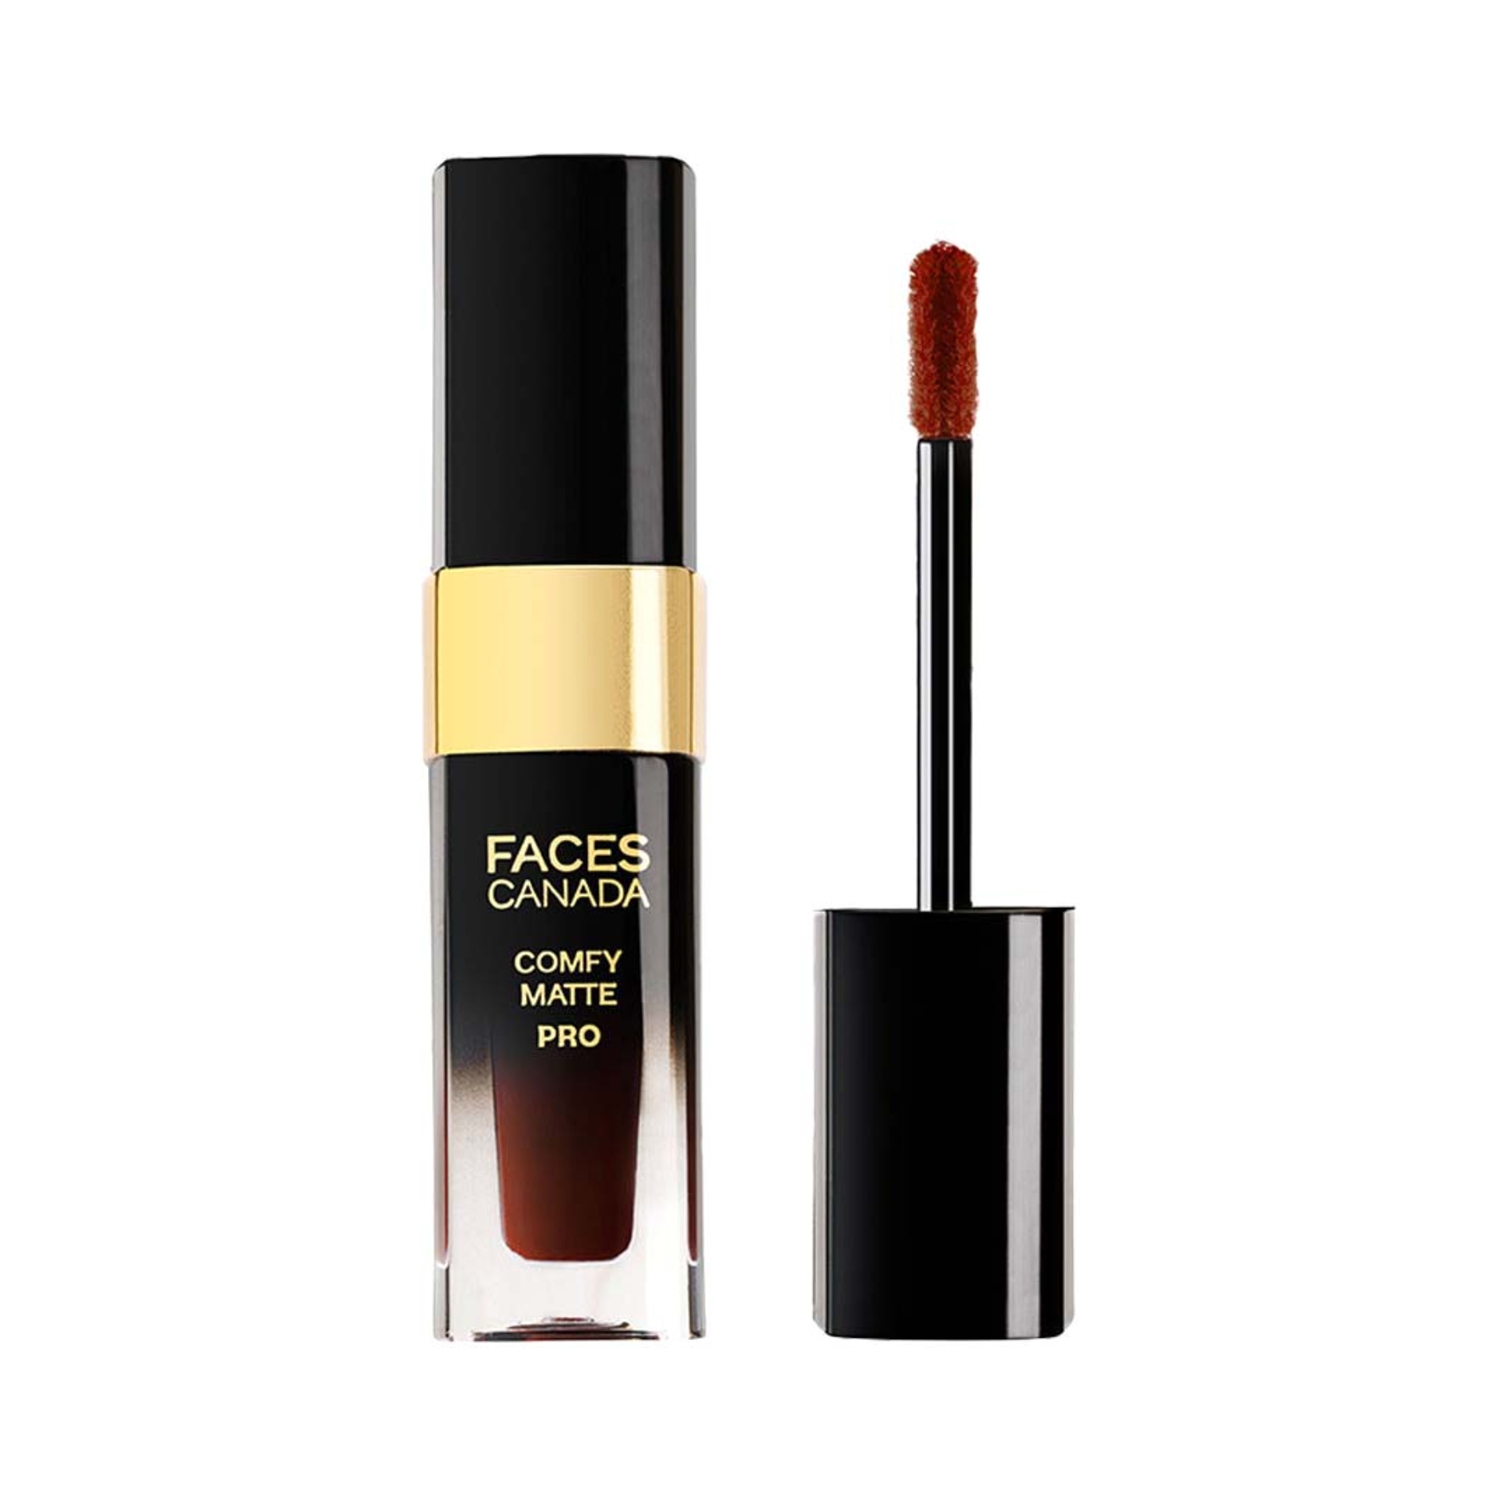 Faces Canada | Faces Canada Comfy Matte Pro Liquid Lipstick 10HR Stay No Dryness - Magnifico Red 01 (5.5ml)